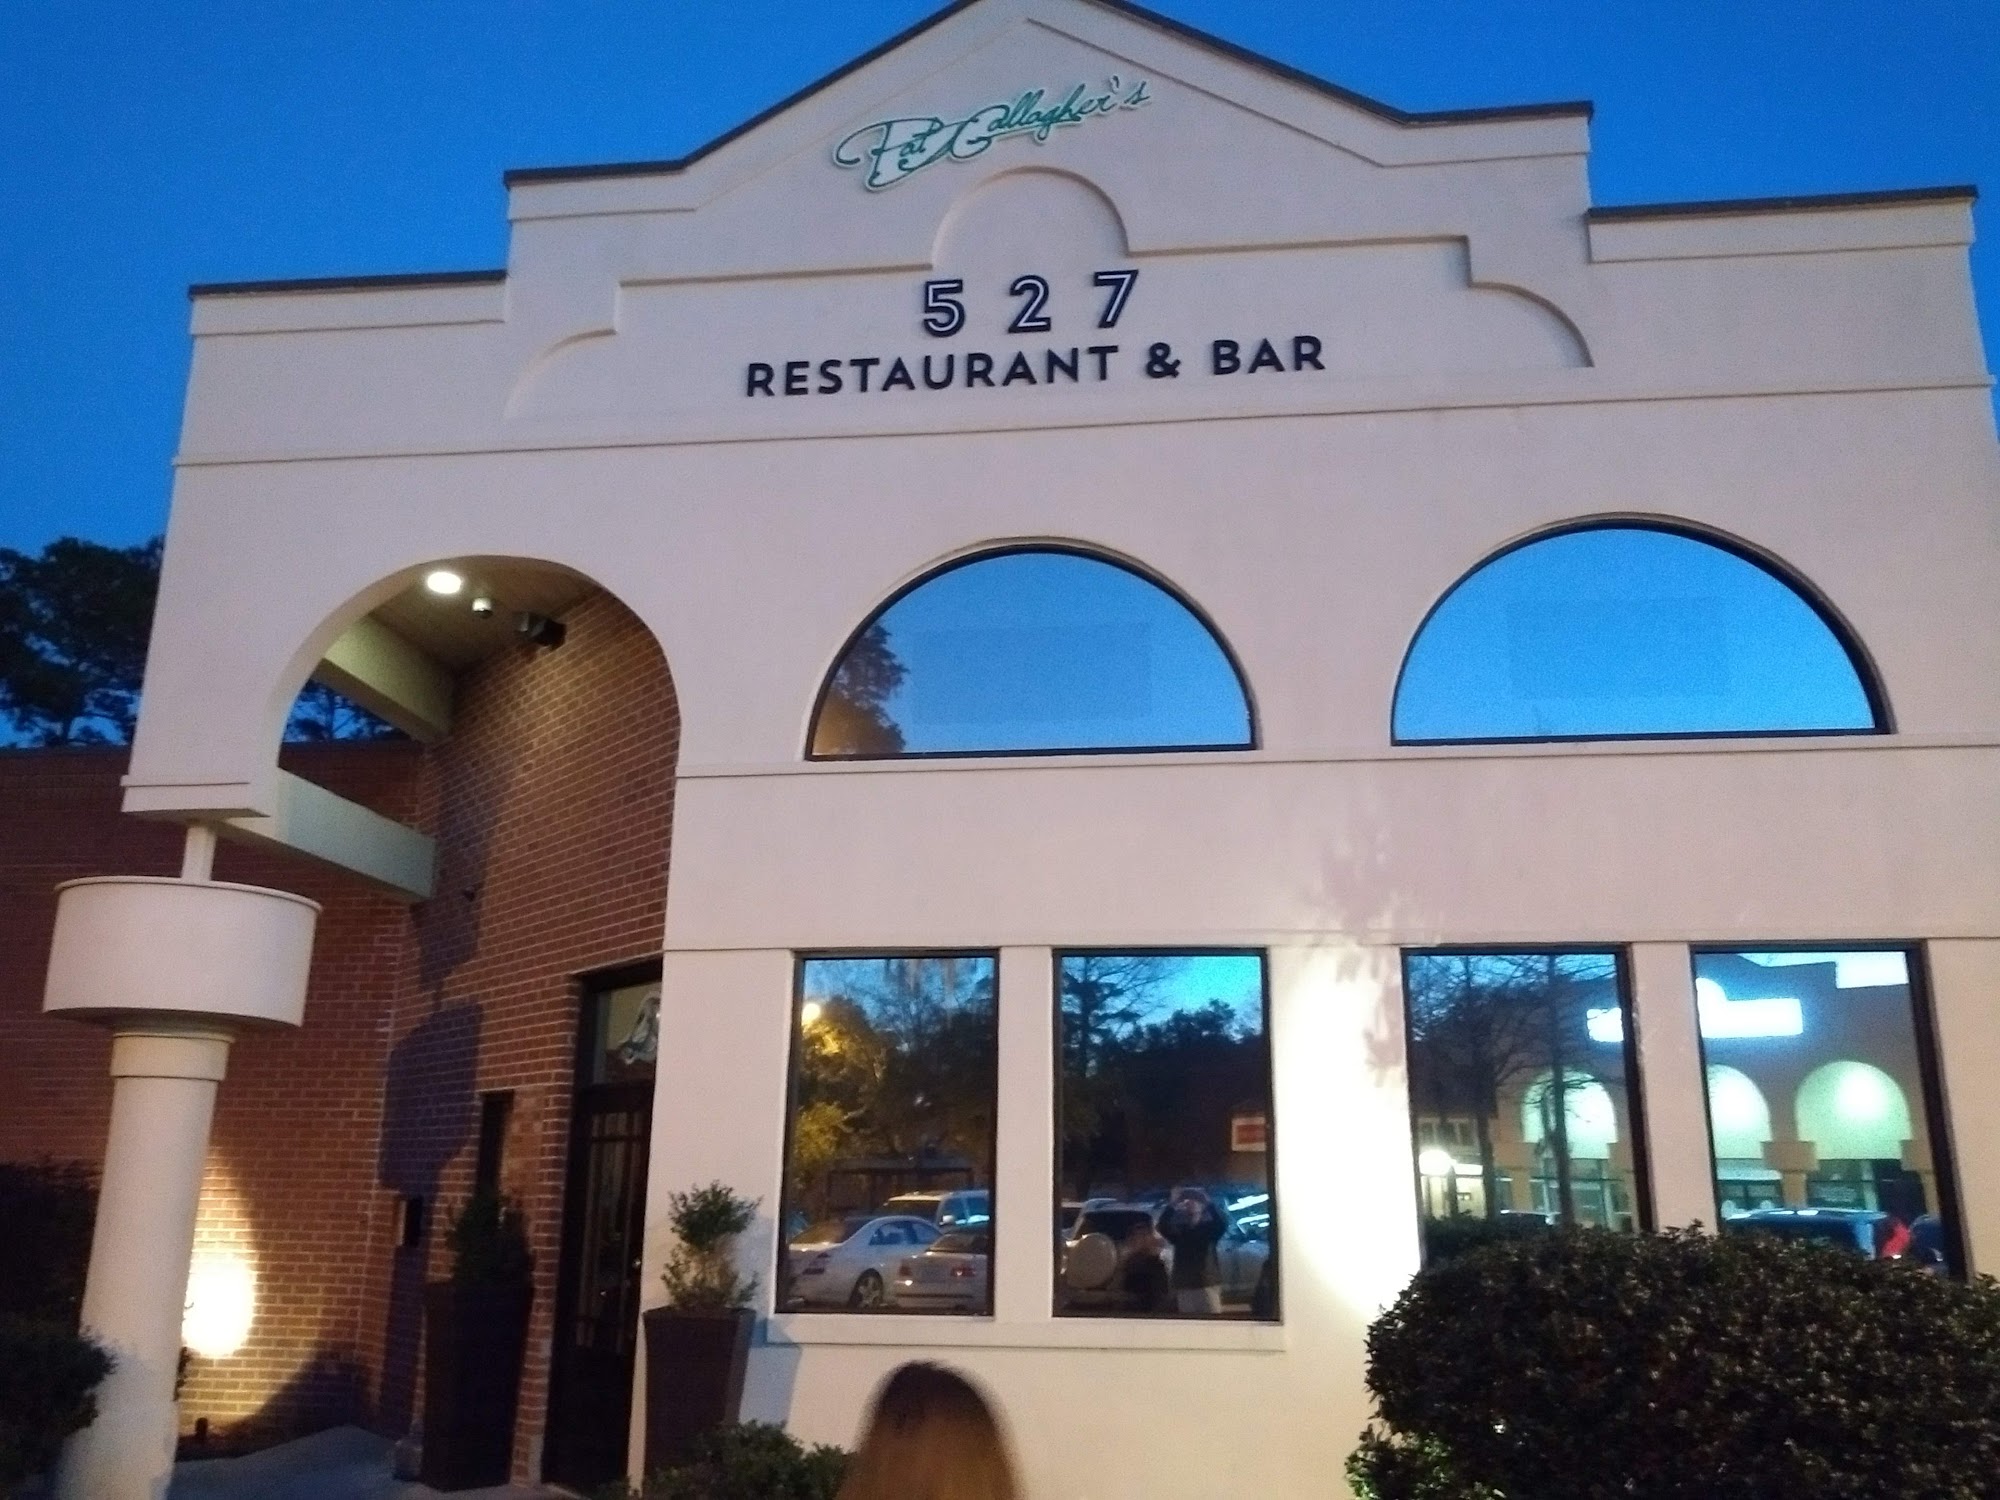 Pat Gallagher's 527 Restaurant & Bar